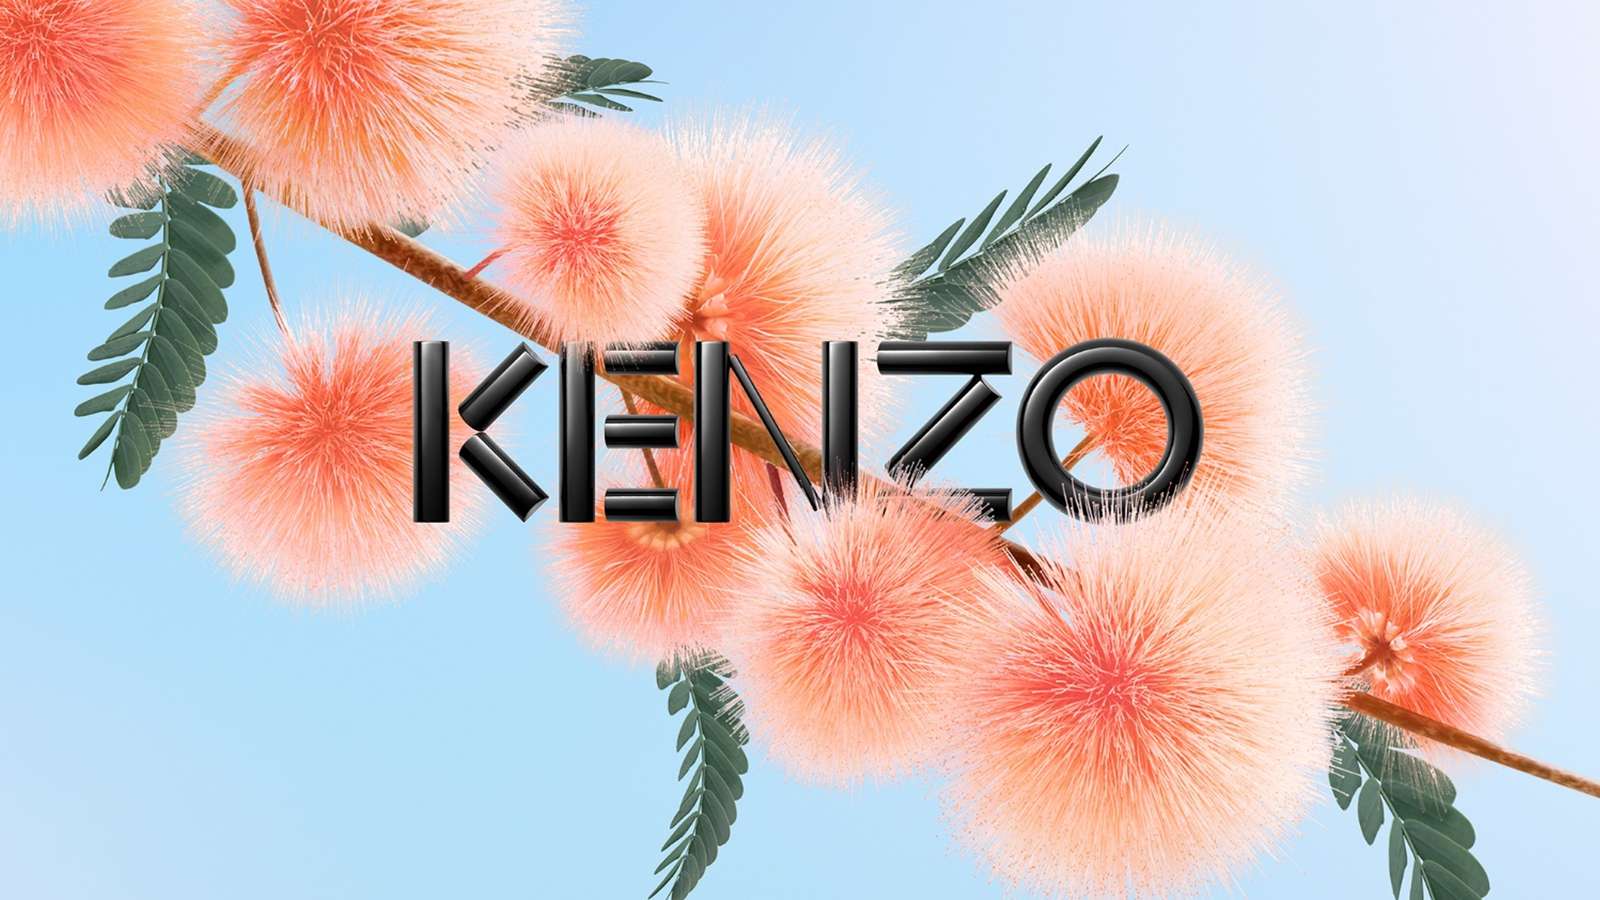 mimoza ikebana puzzle online